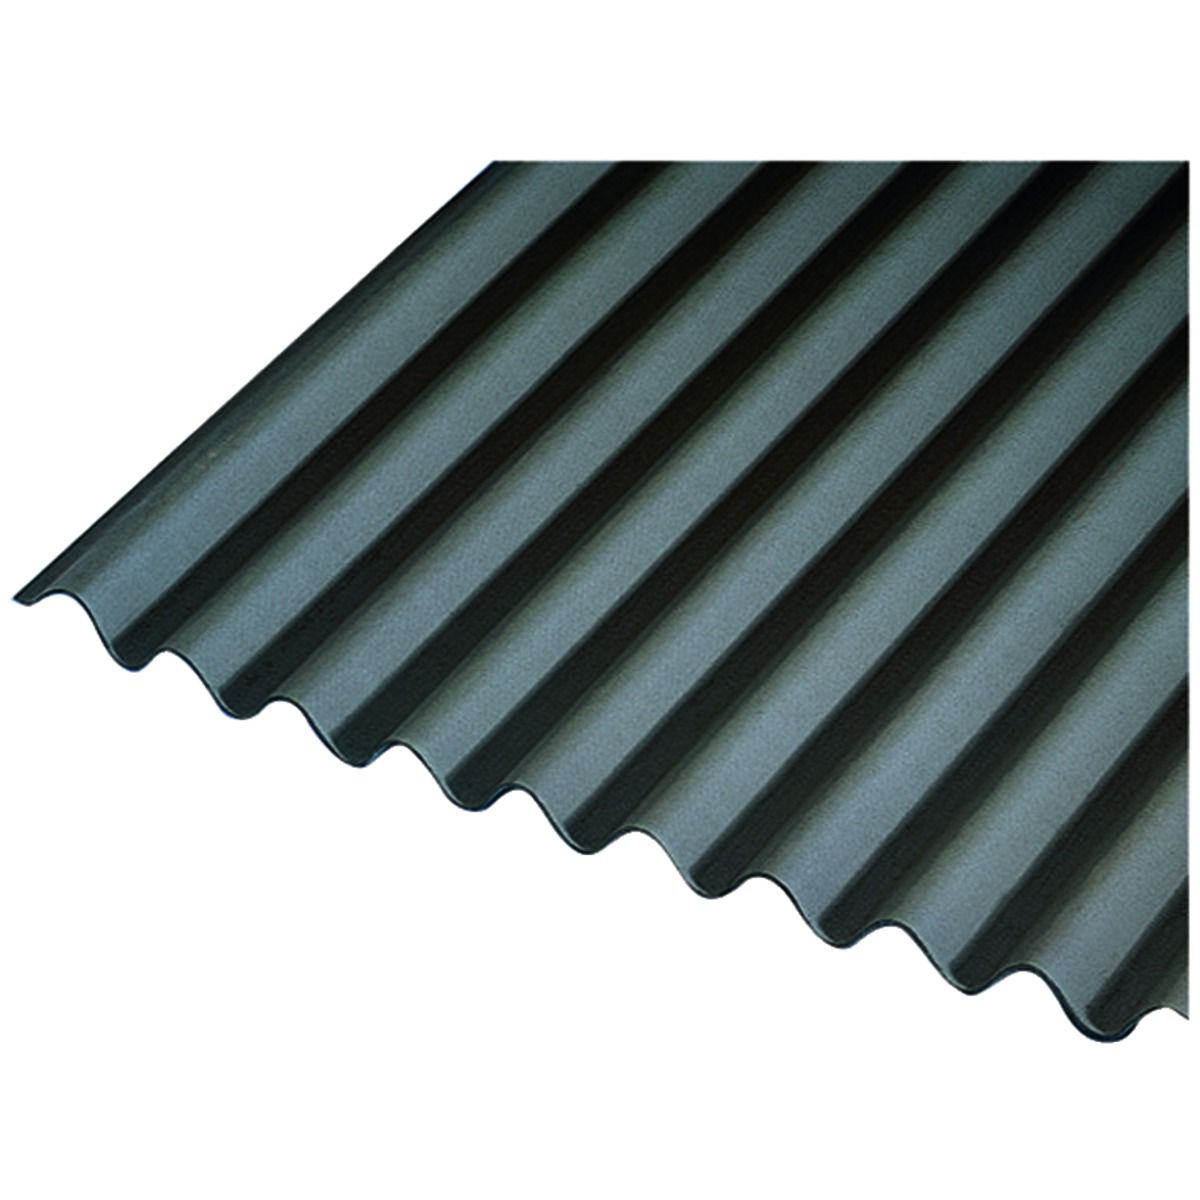 Image of Onduline Black Bitumen Corrugated Roof Sheet - 950mm x 2000mm x 3mm